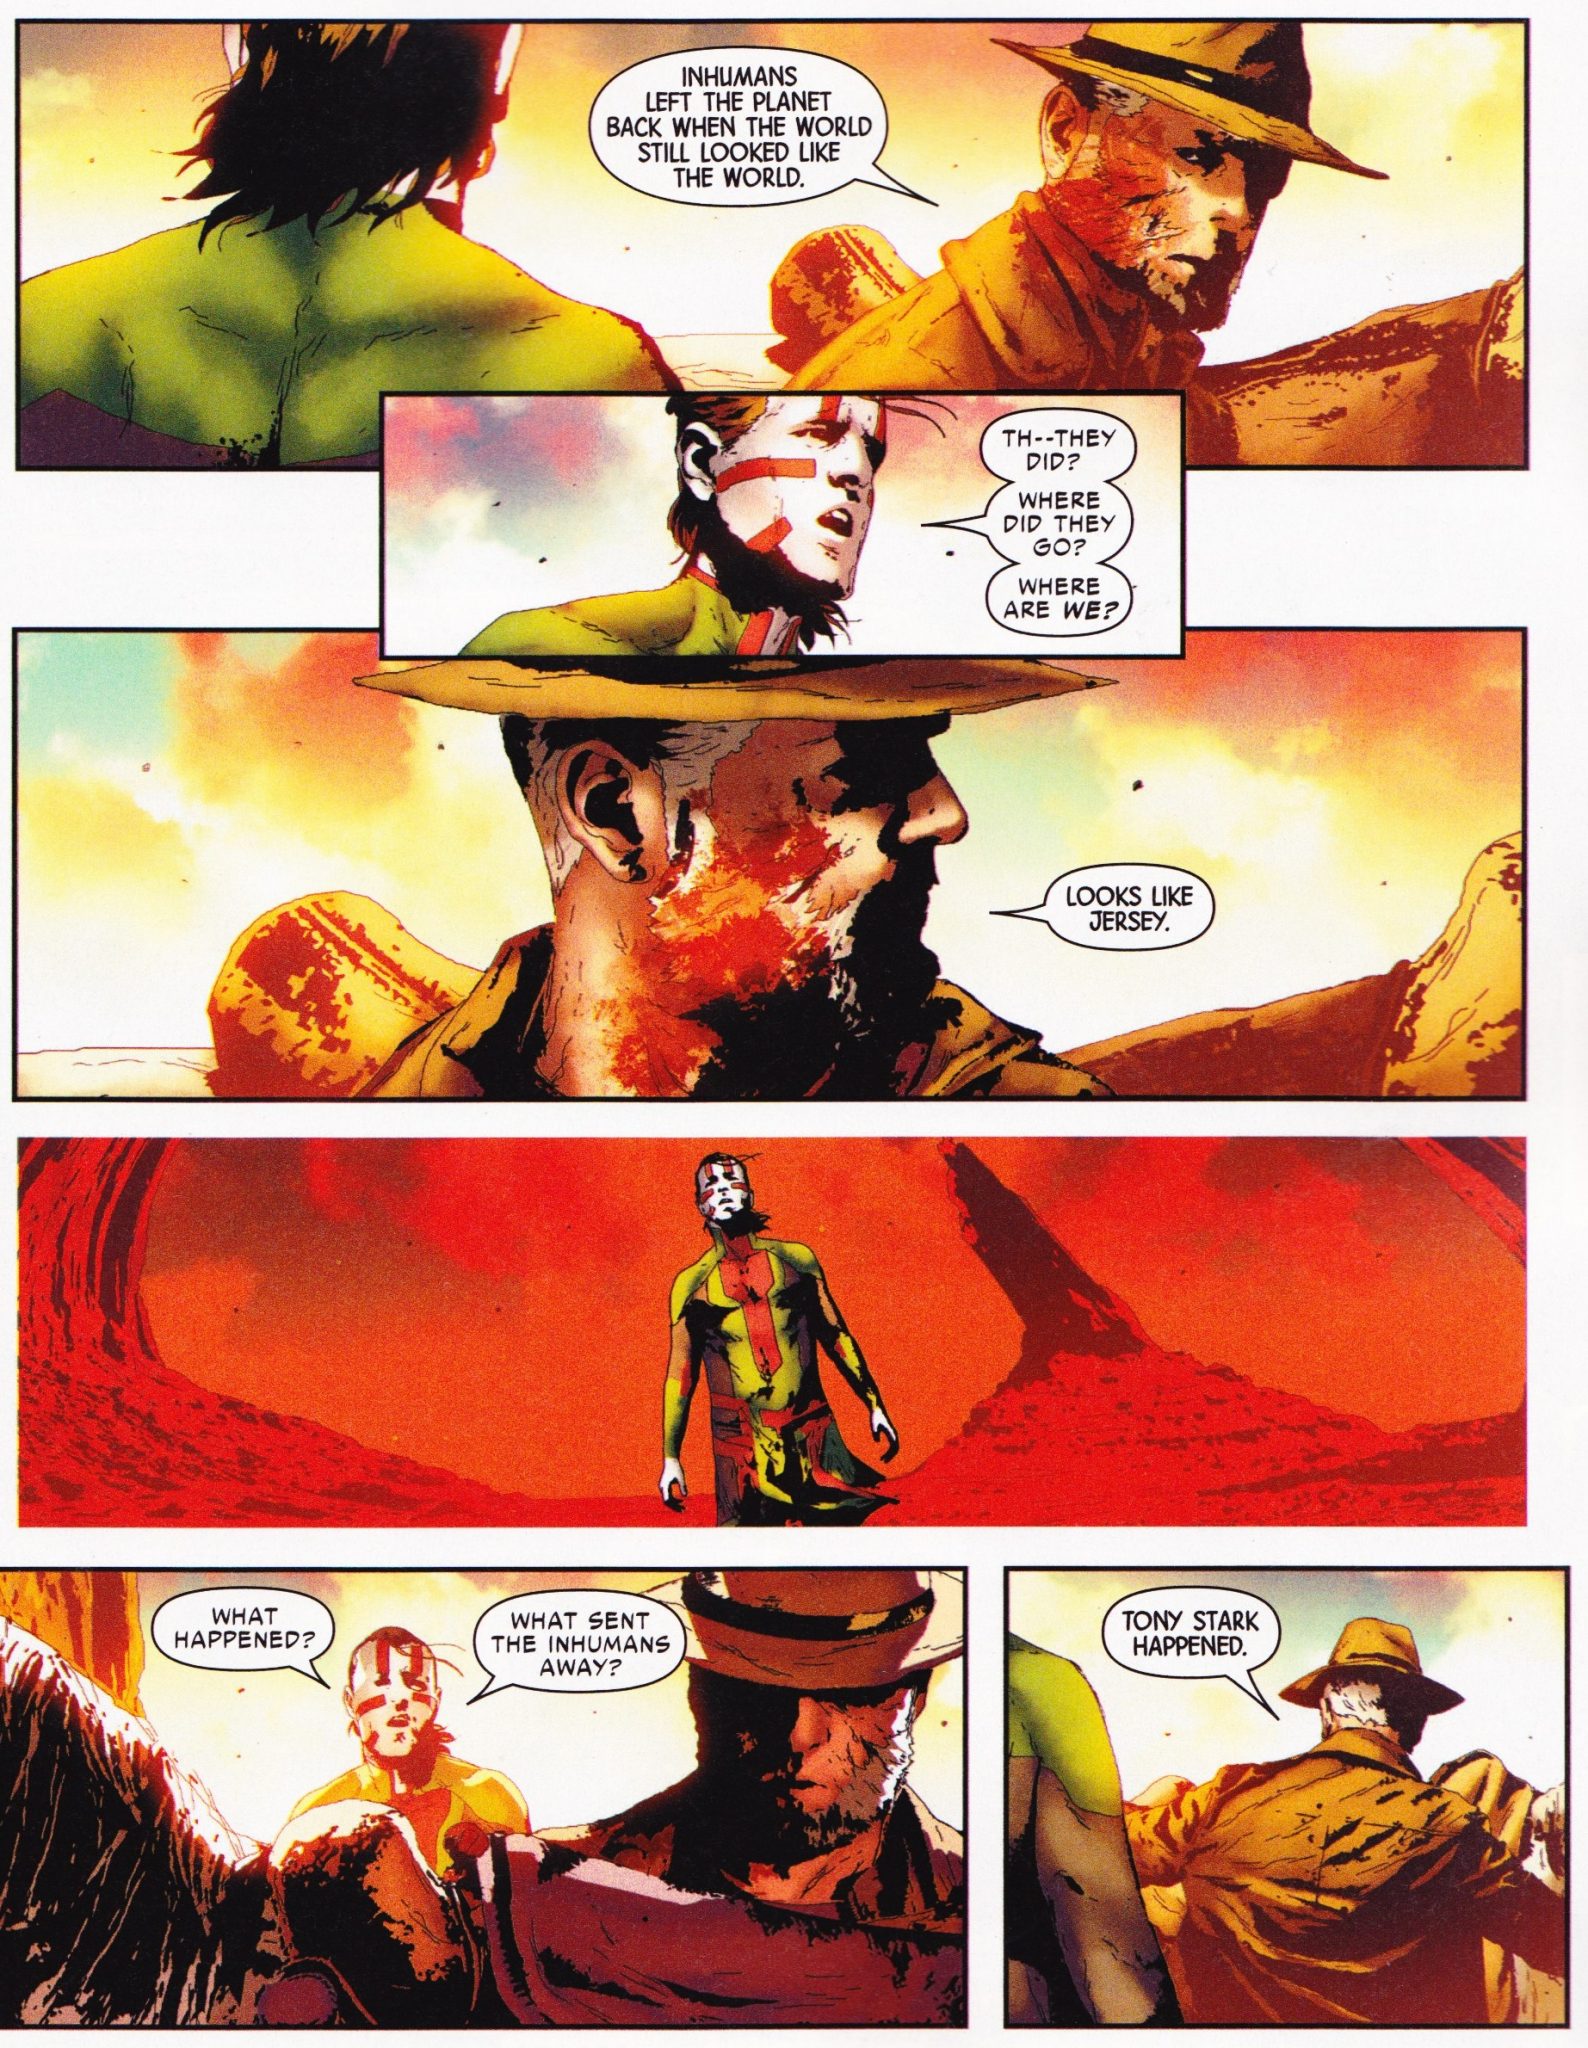 O Velho Logan e Ulisses - Guerra Civil II: Tony Stark está morto?